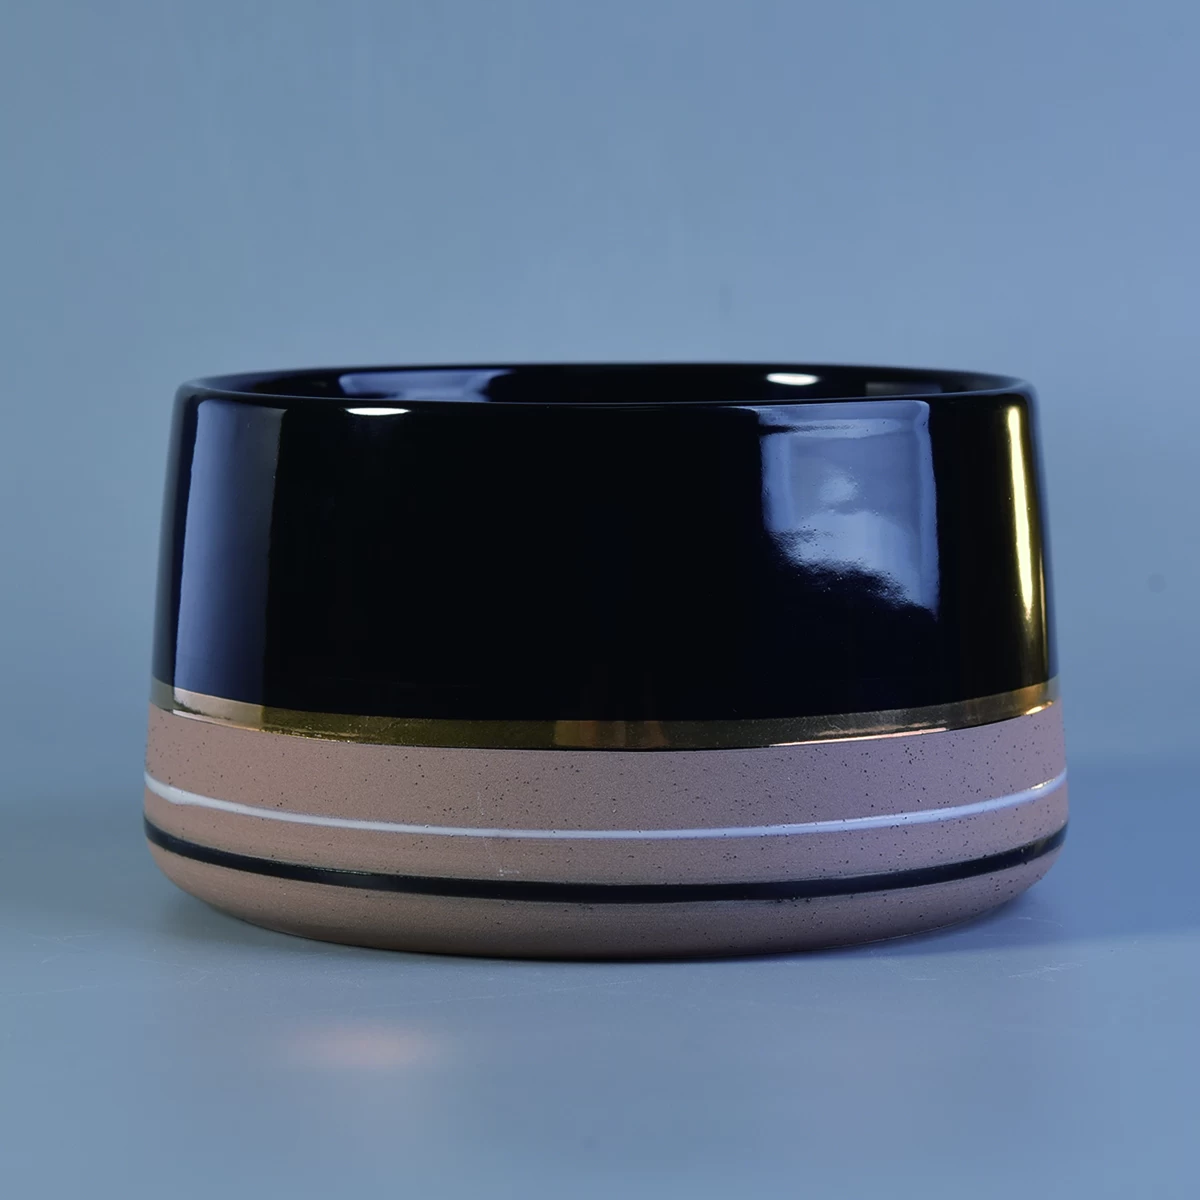 Sunny custom empty black large ceramic candle container vessel